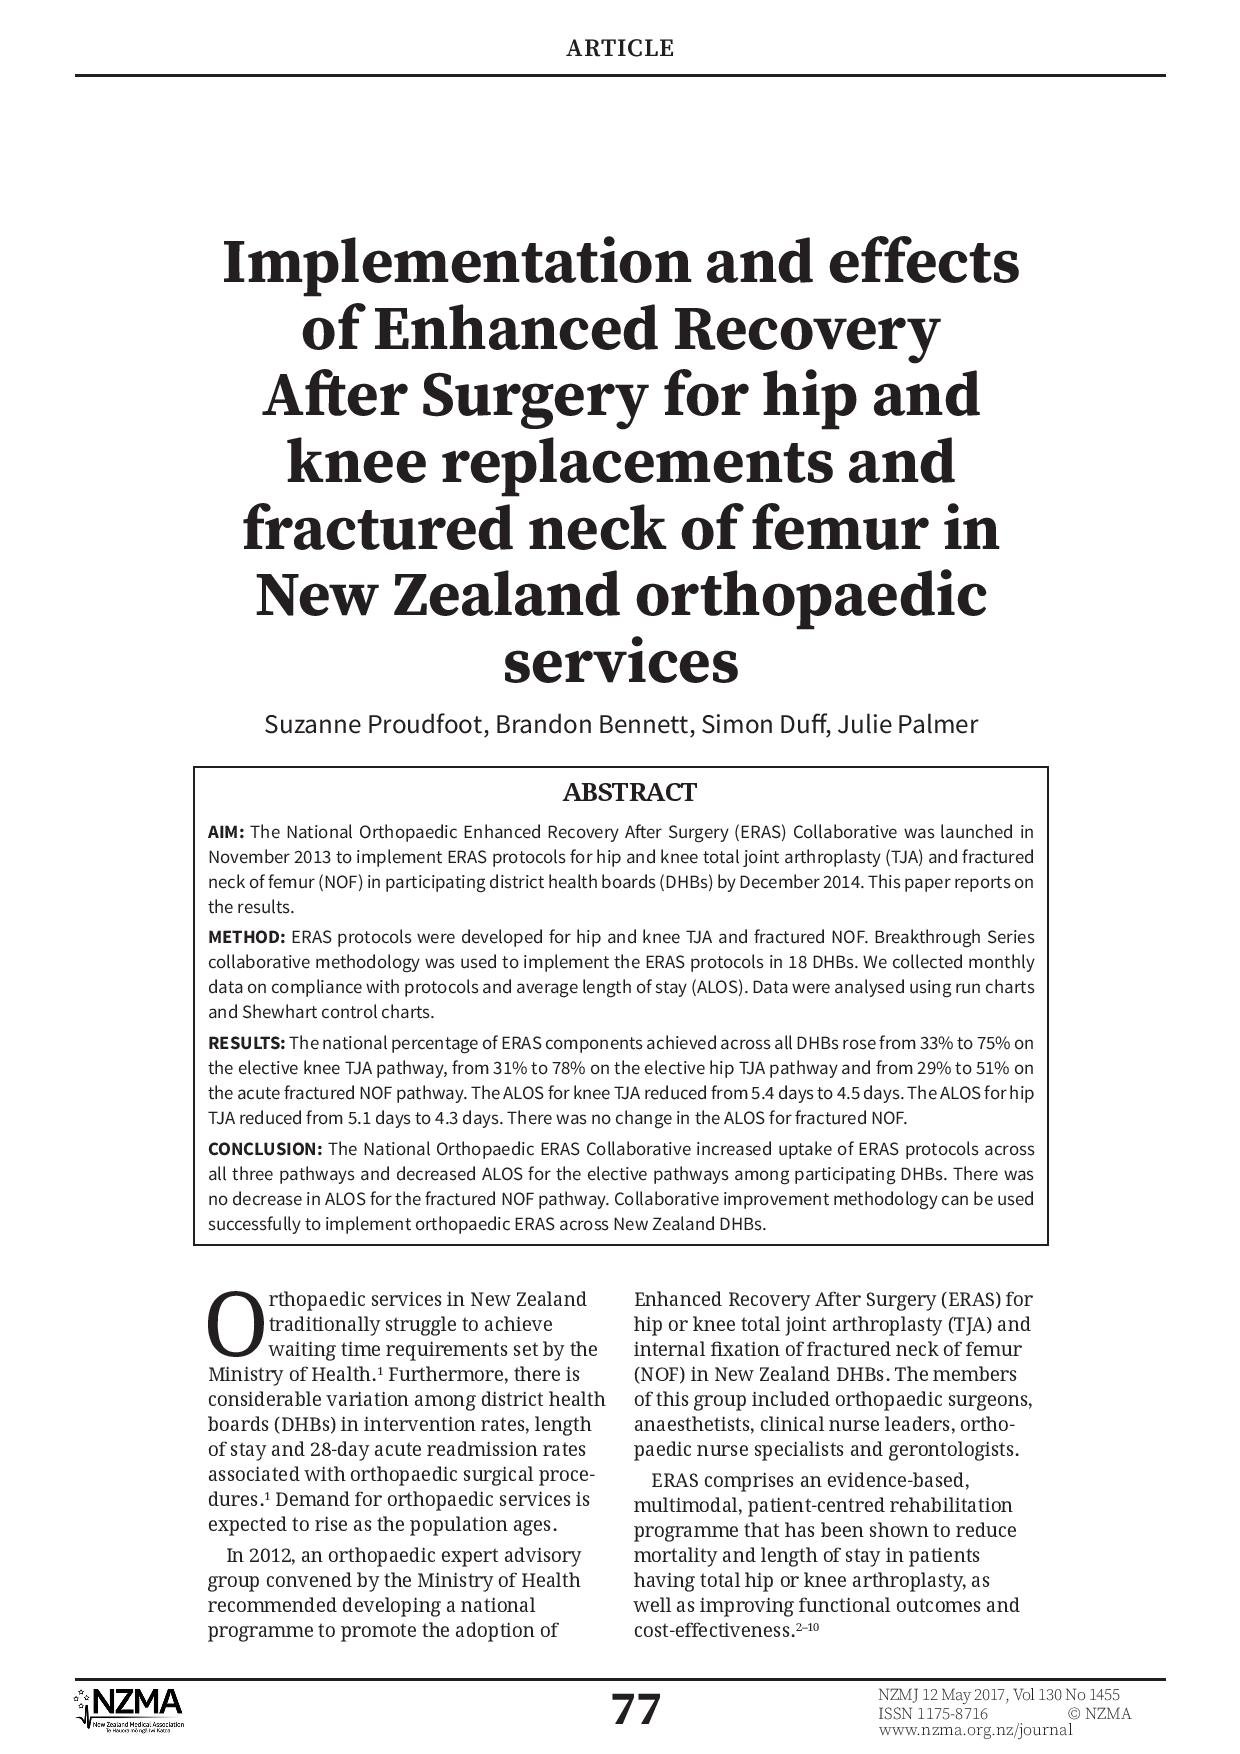 enhancedrecovery-page-001.jpg